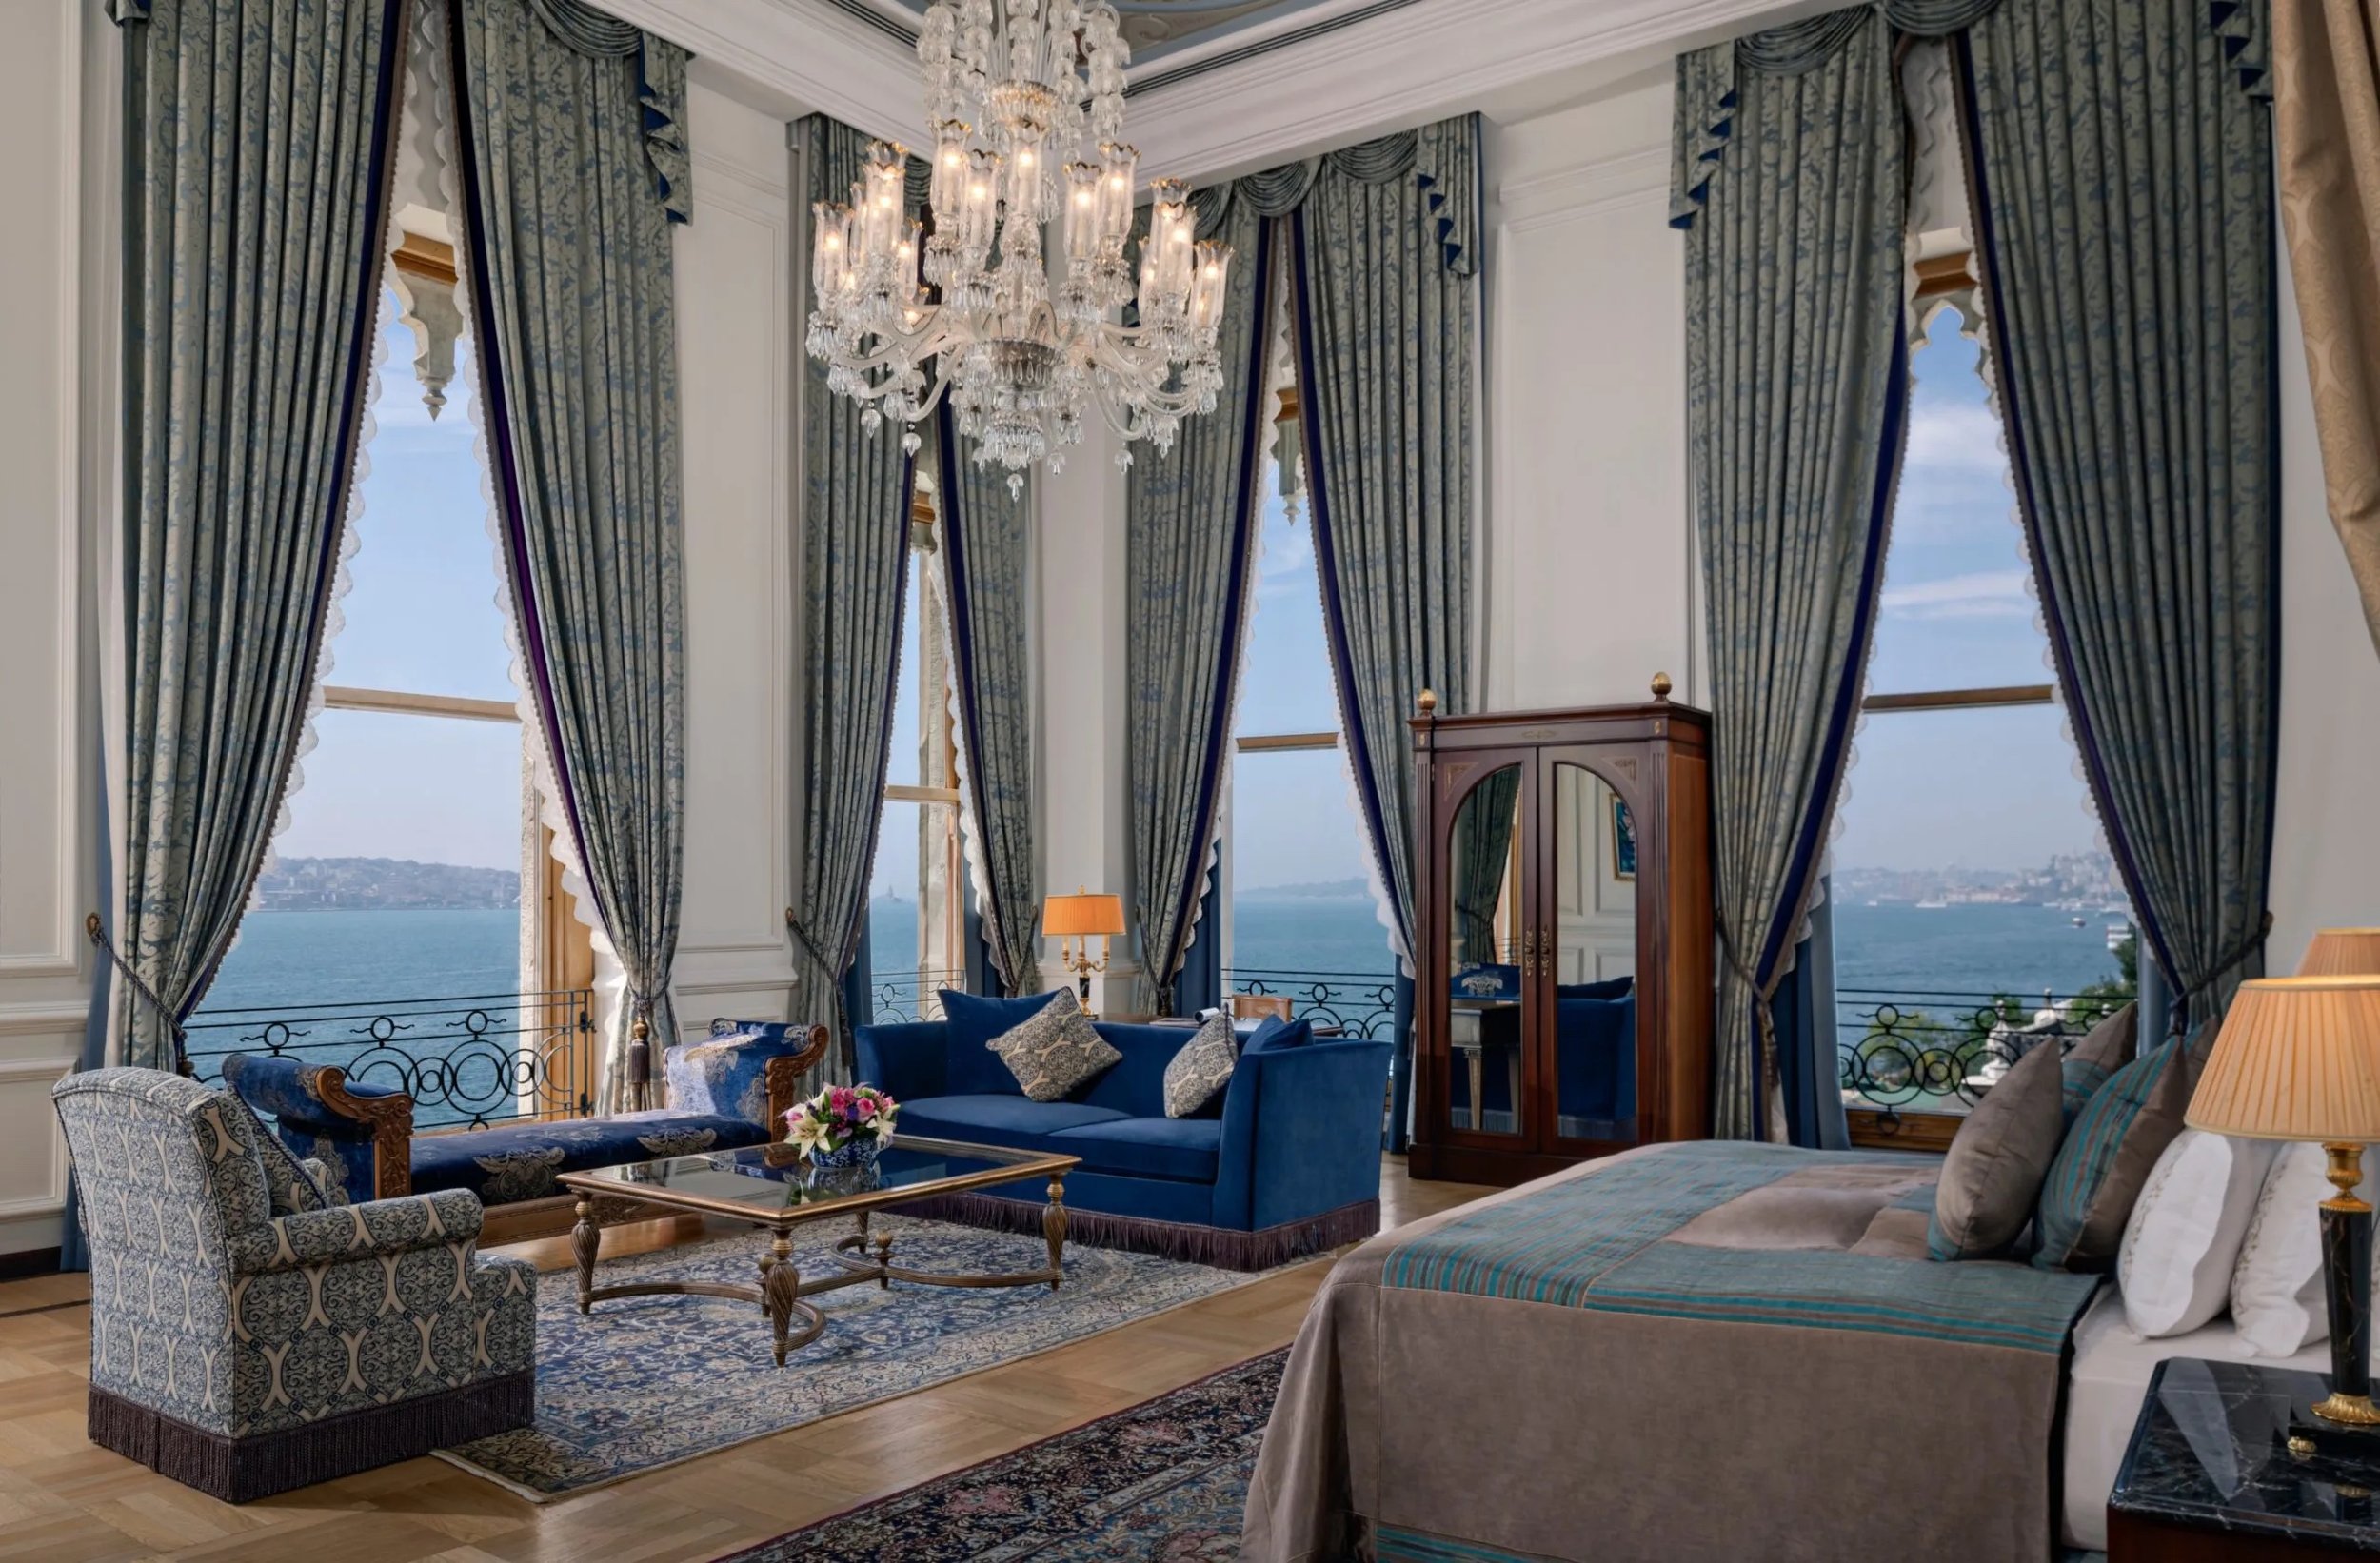 Sultan-Suite-Ciragan-Palace-Kempinski-Istanbul-9-scaled.jpg